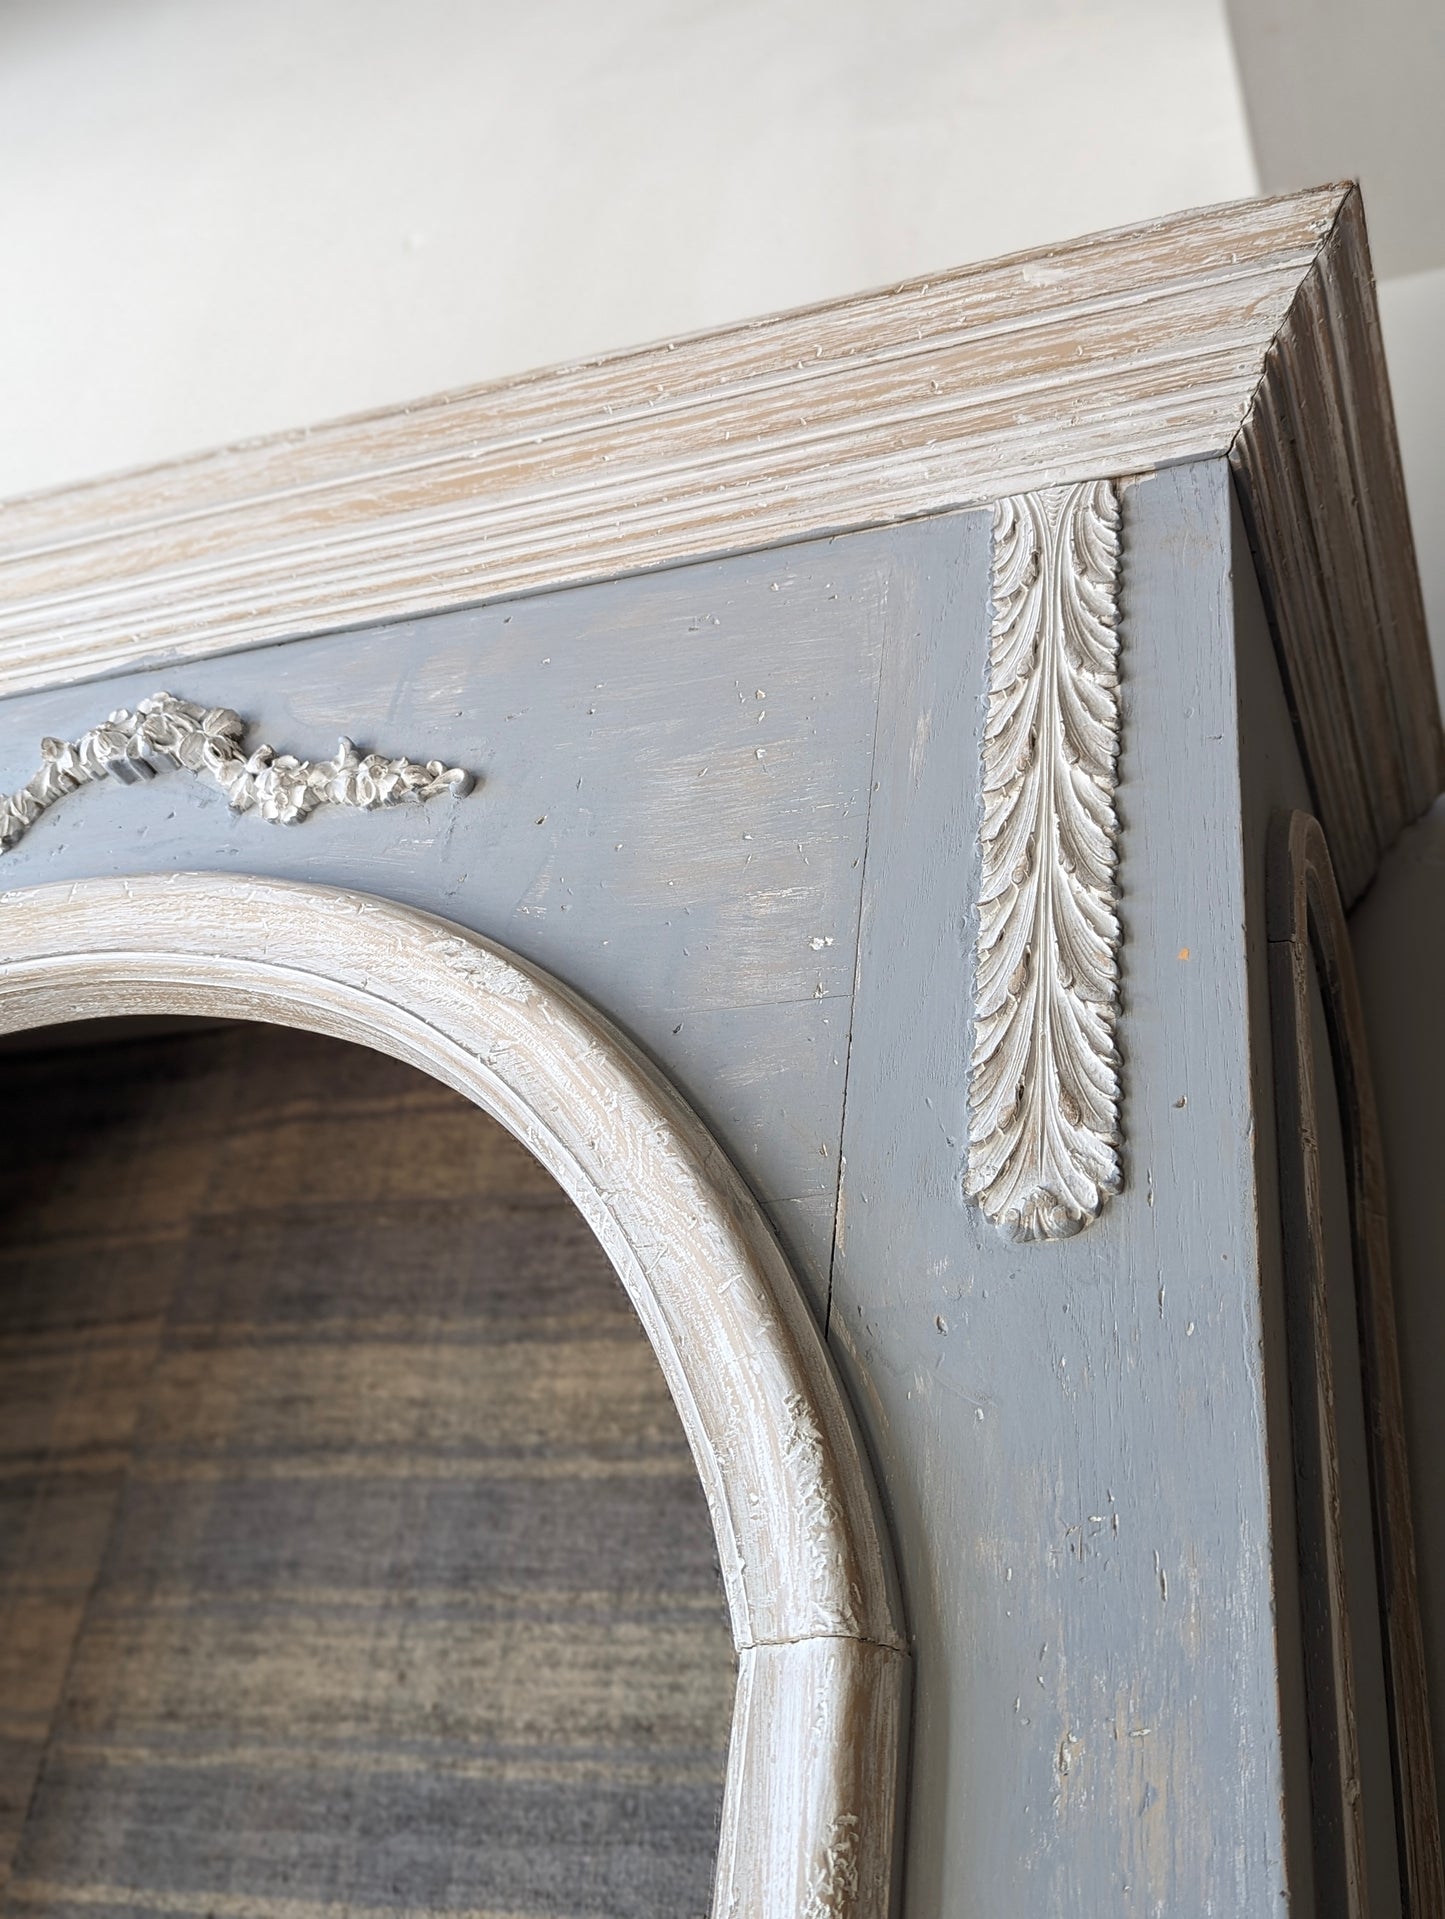 Bookshelf blue/grey and white patina cabinet on six legs